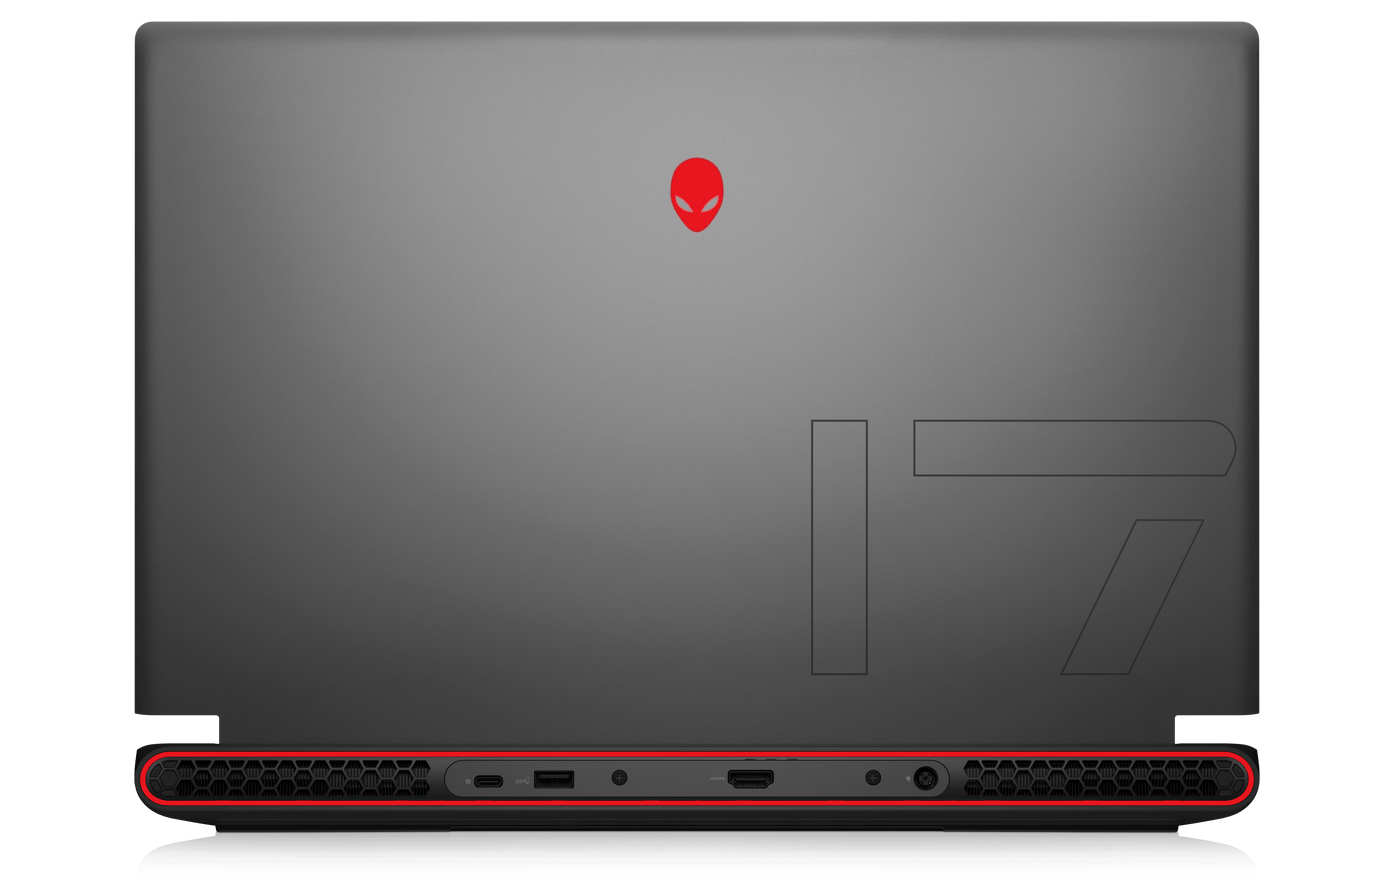 DELL Laptops Dell Alienware m17 R5 17.3" 480Hz AMD Ryzen 7 6800H 32 GB 512 GB NVMe  NVIDIA® RTX 3070 Ti laptop  (Refurbished)